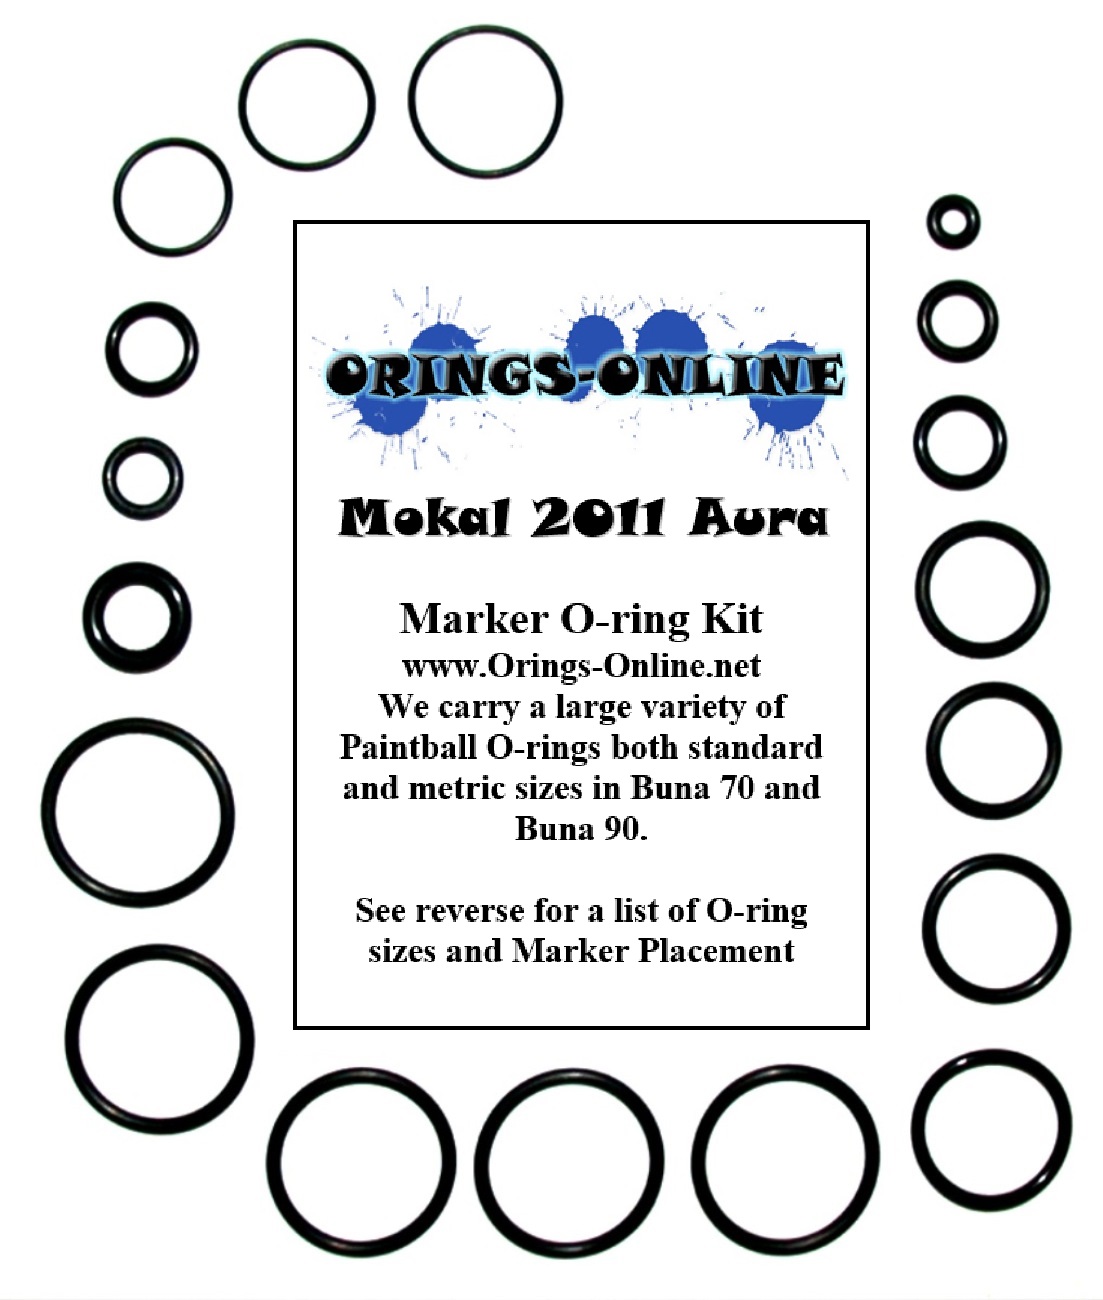 Mokal 2011 Aura Marker O-ring Kit